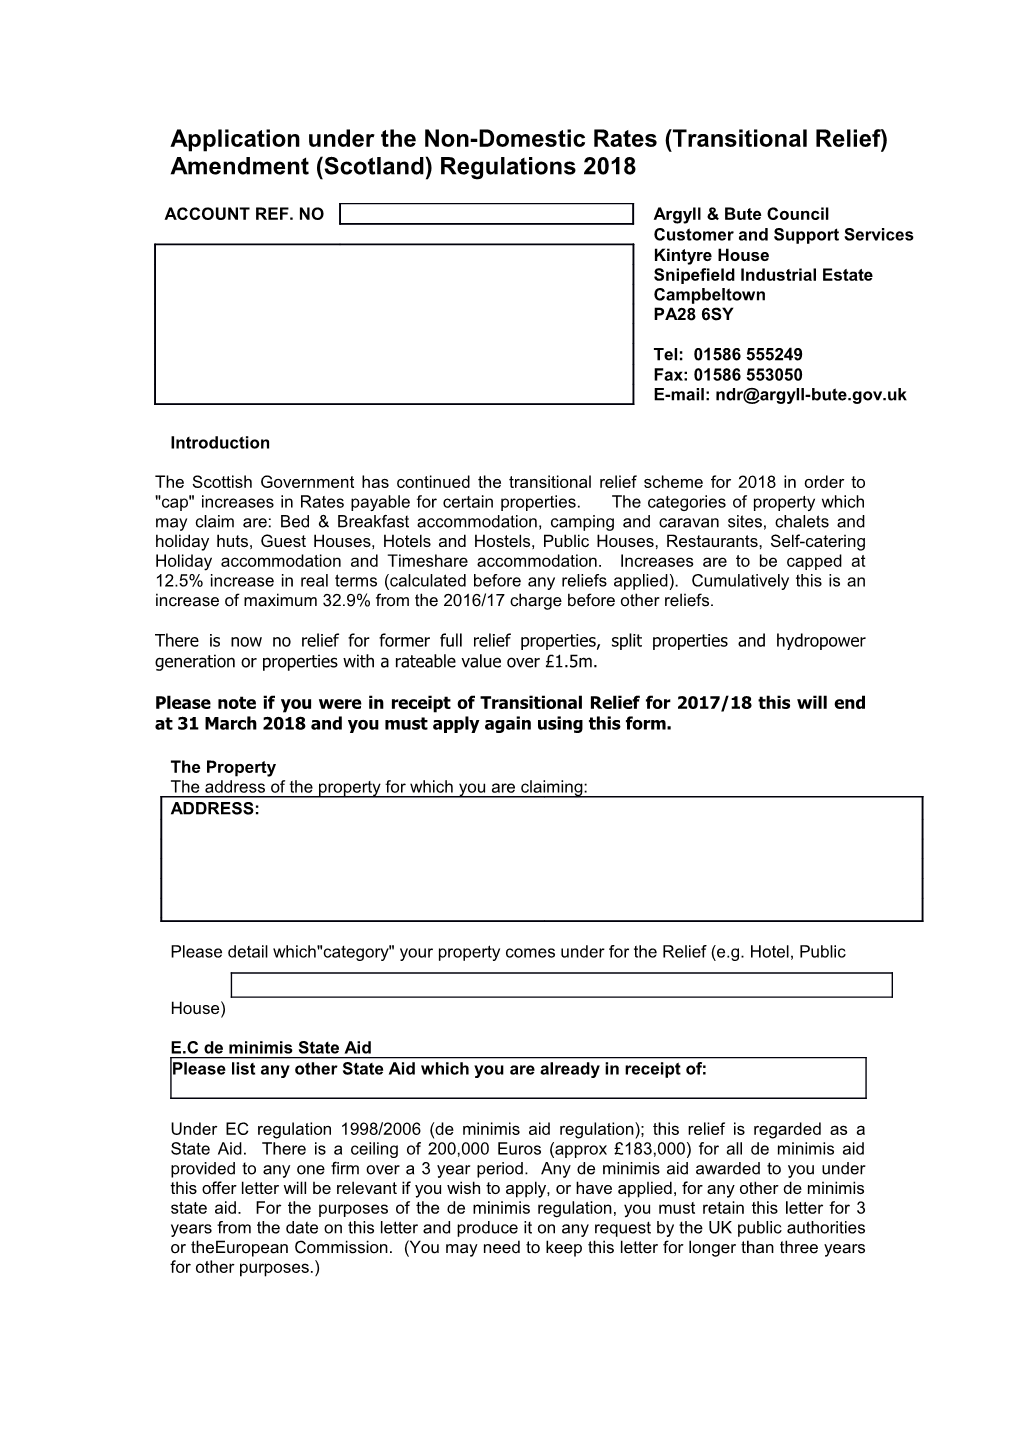 Application Under the Non-Domestic Rates (Transitional Relief) Amendment (Scotland) Regulations